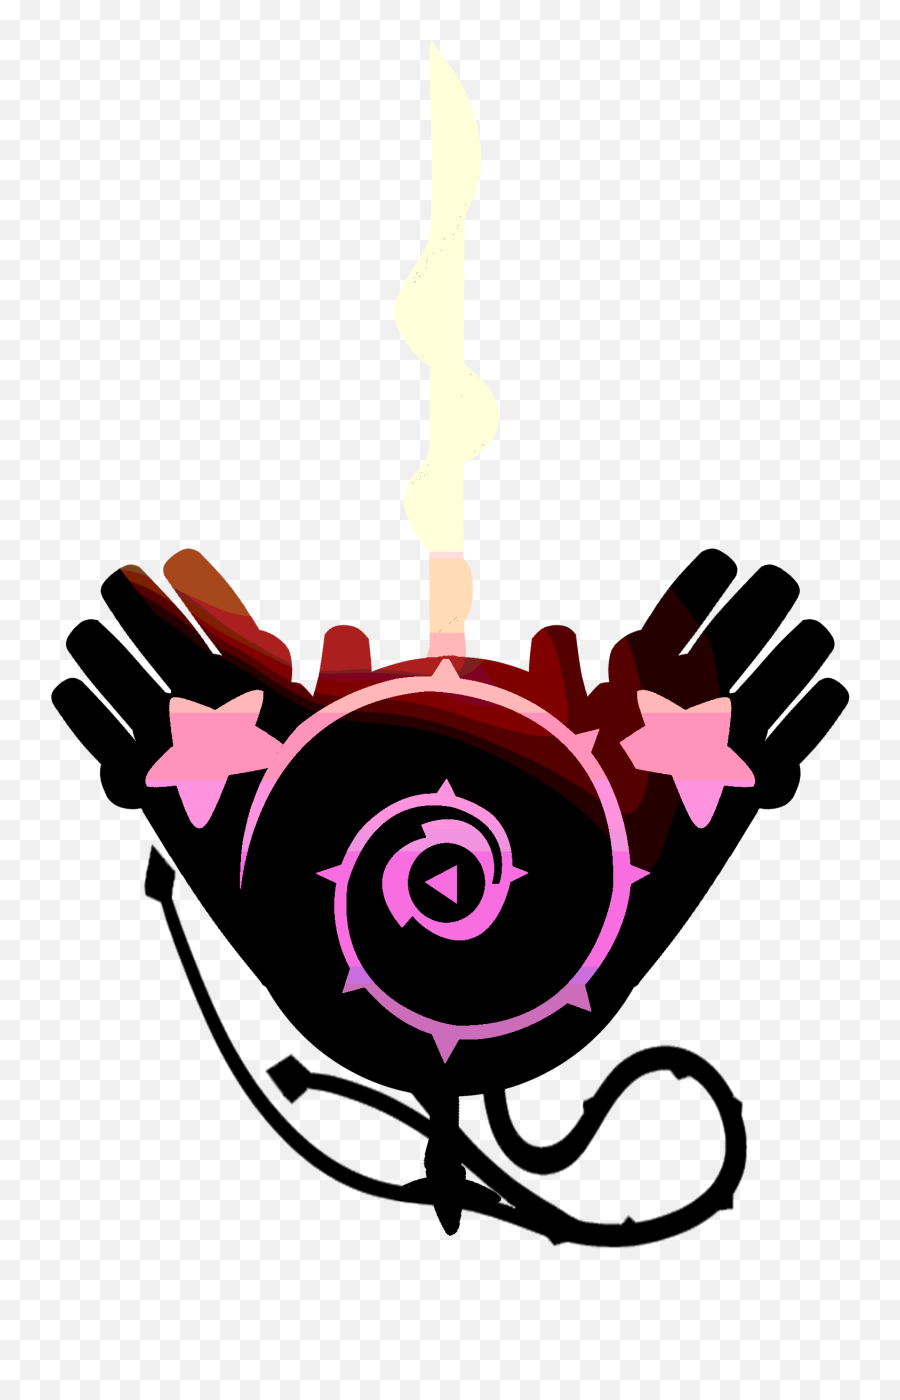 The Crystal Weapons Minimalist Emoji,Steven Universe Clipart